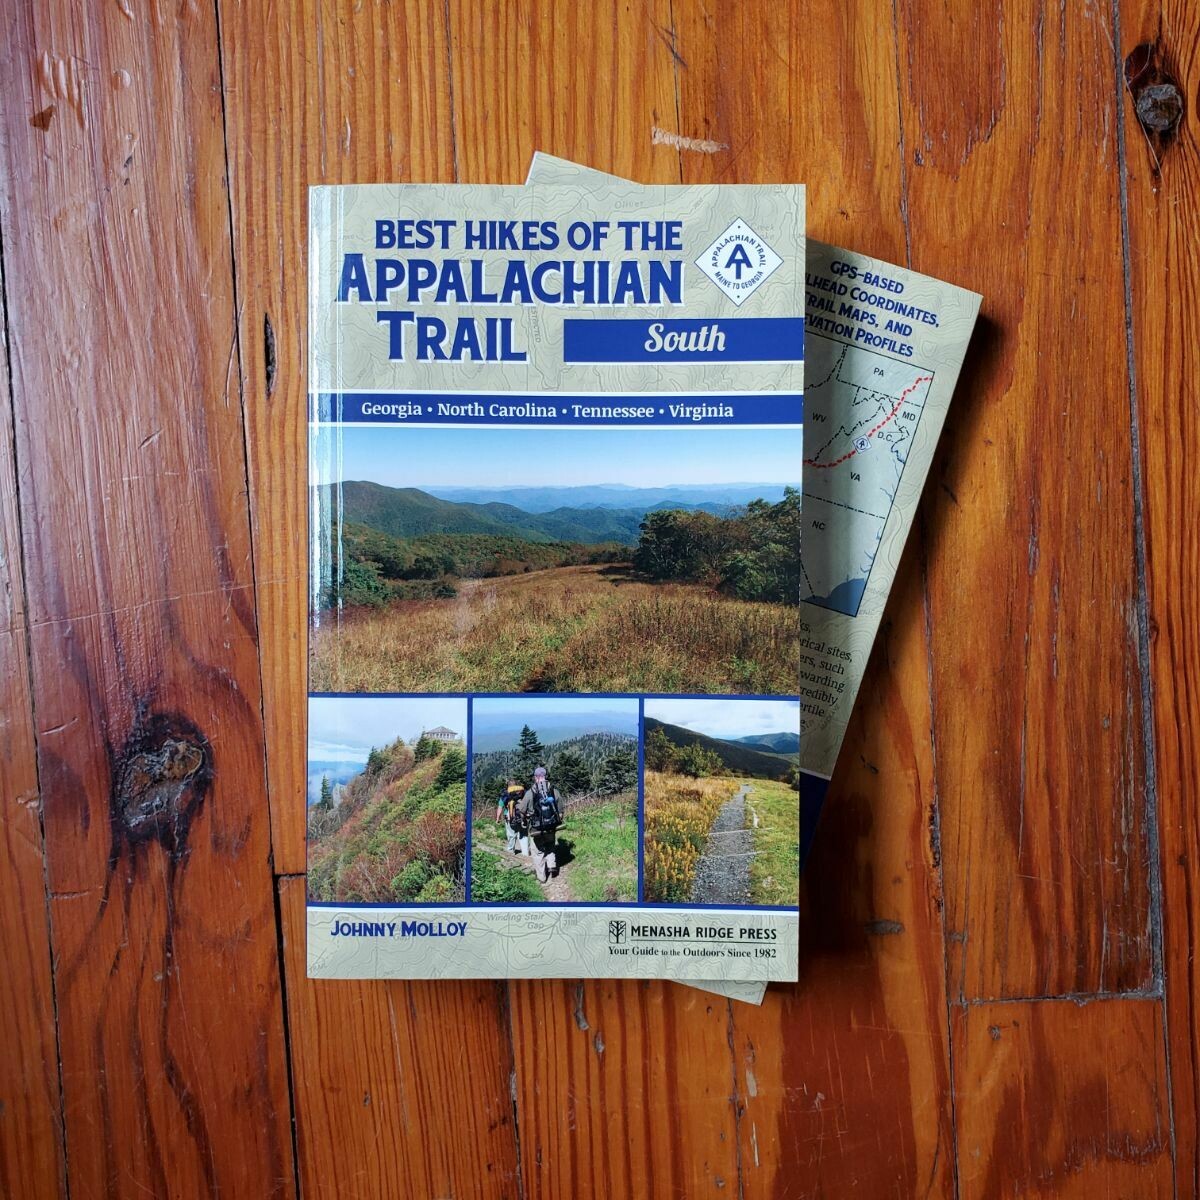 Best Hikes Appalachian Trail by: Johnny Molloy